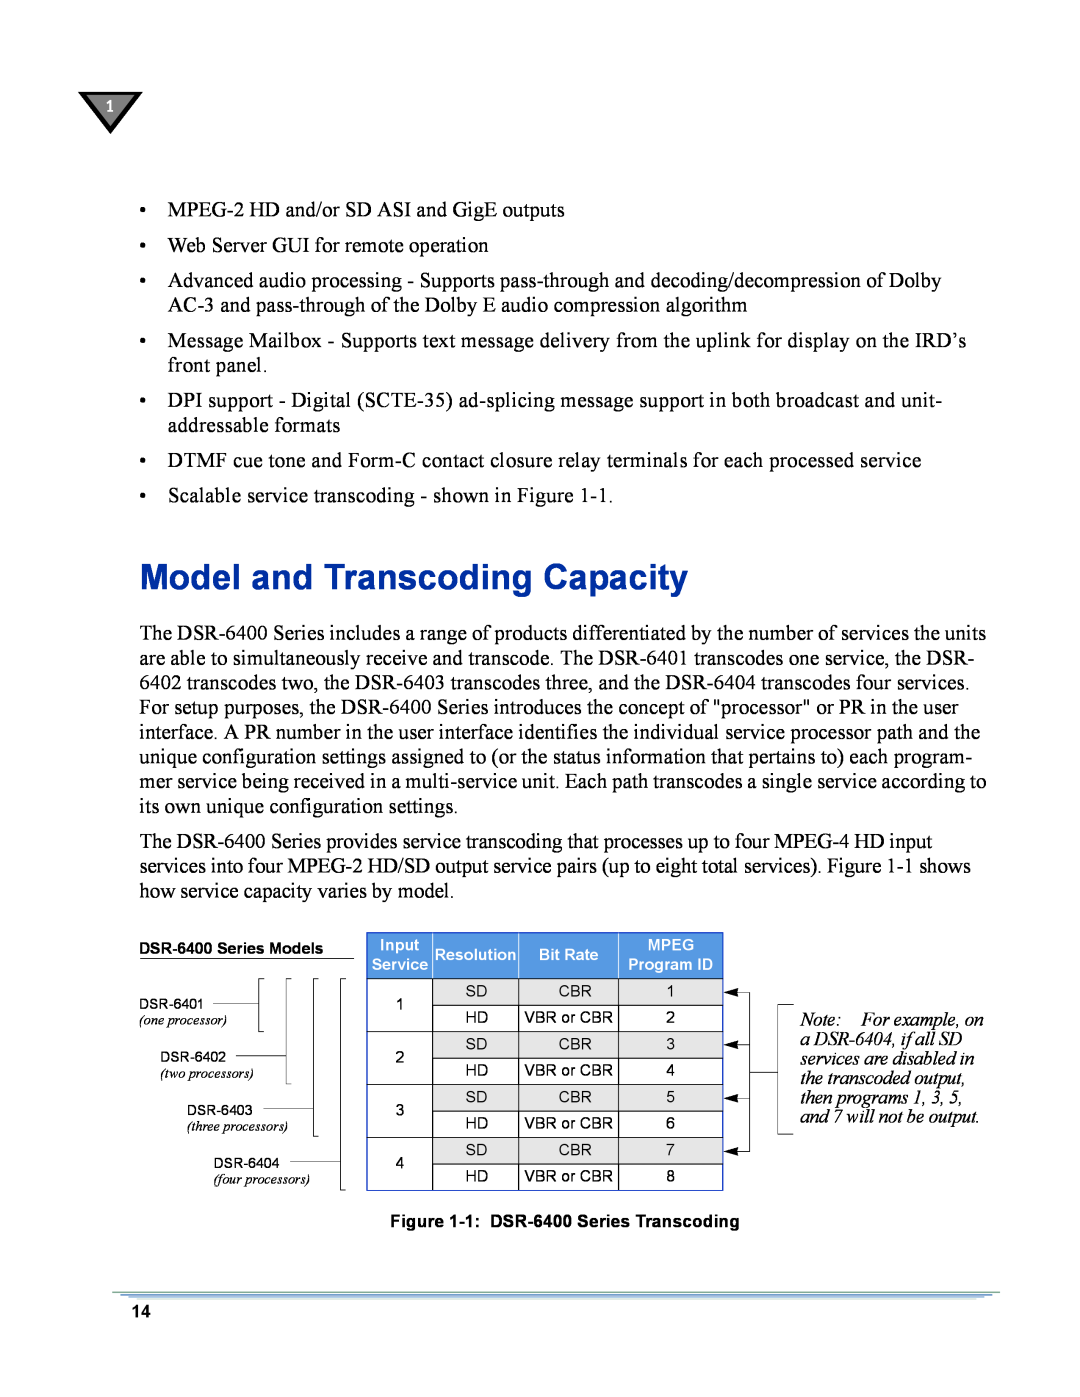 Motorola DSR-6400 manual Model and Transcoding Capacity 